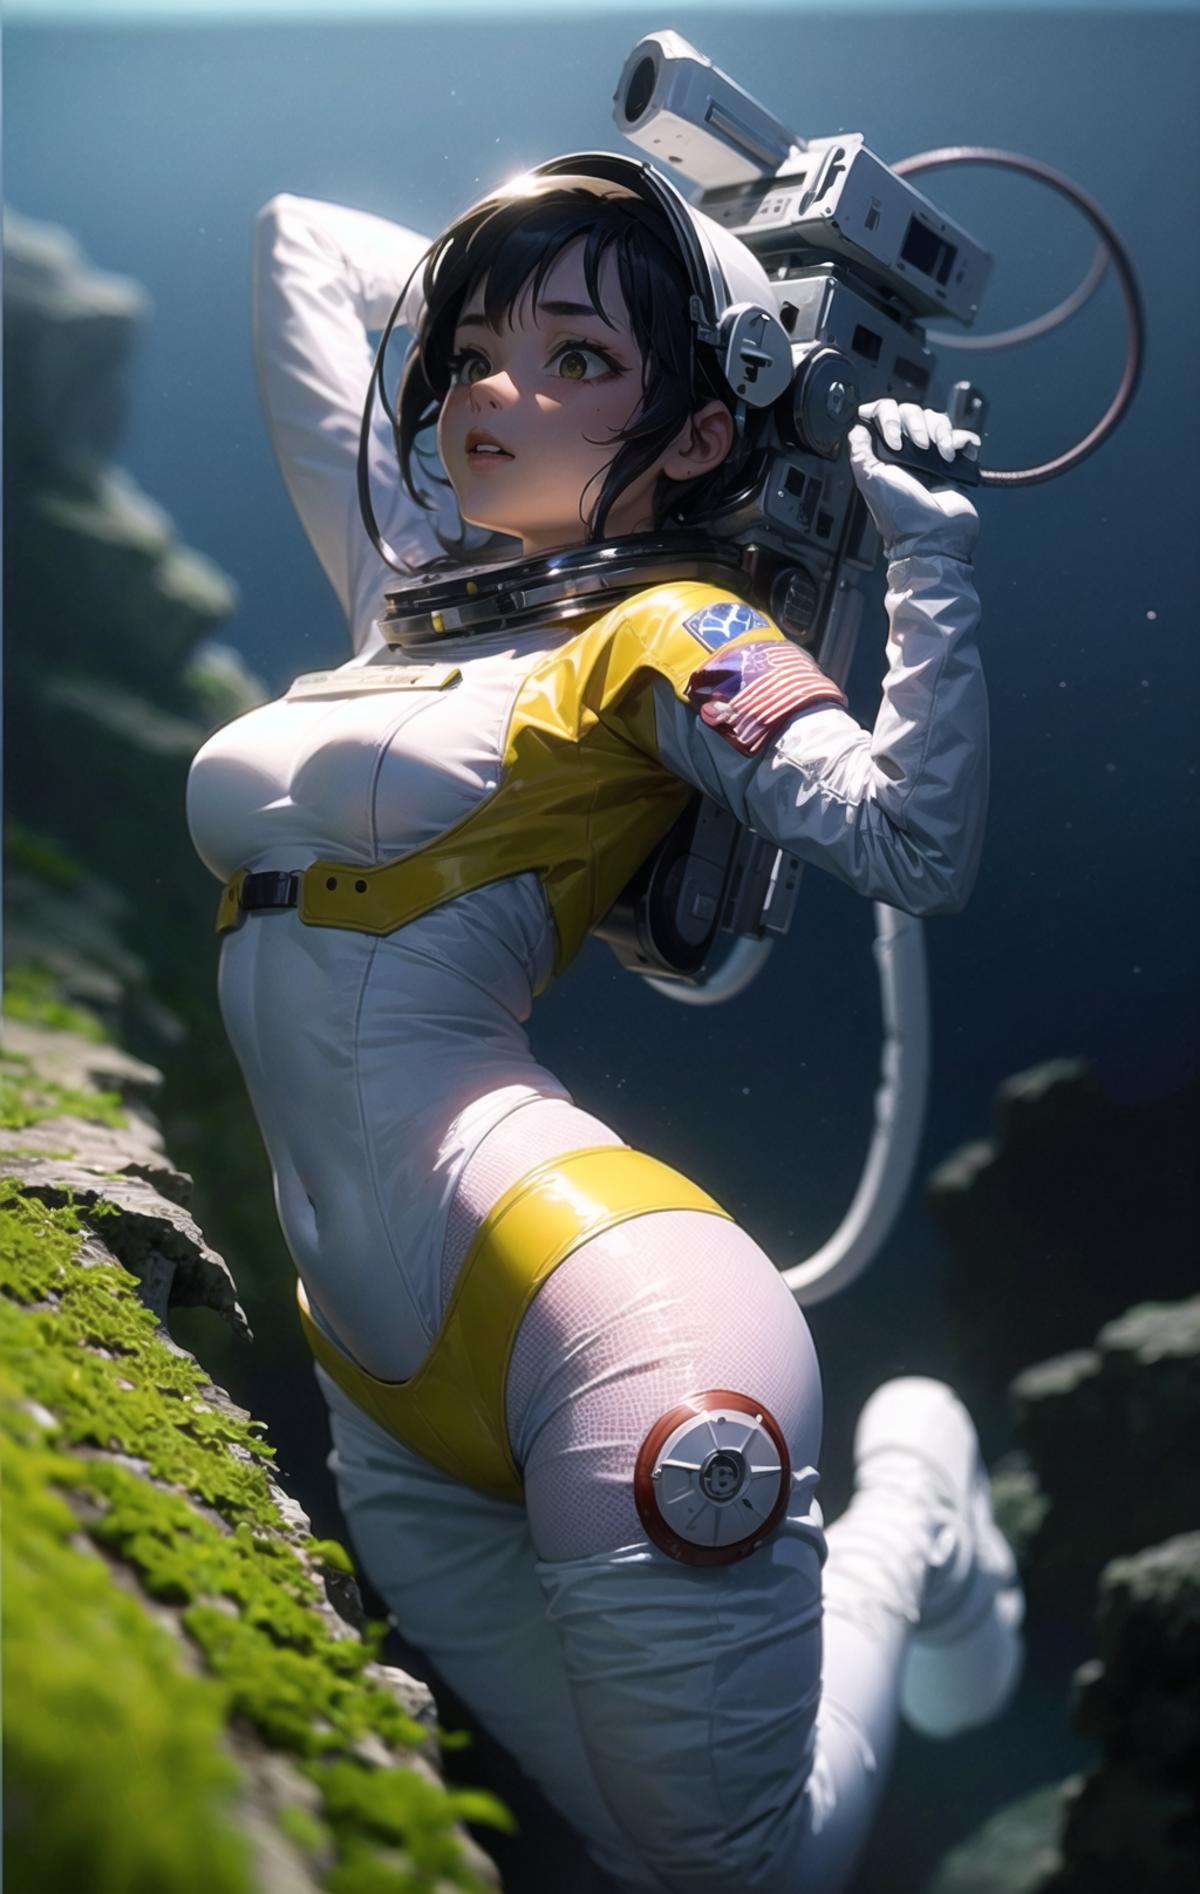 Clothes Spacesuit image by Corvid18